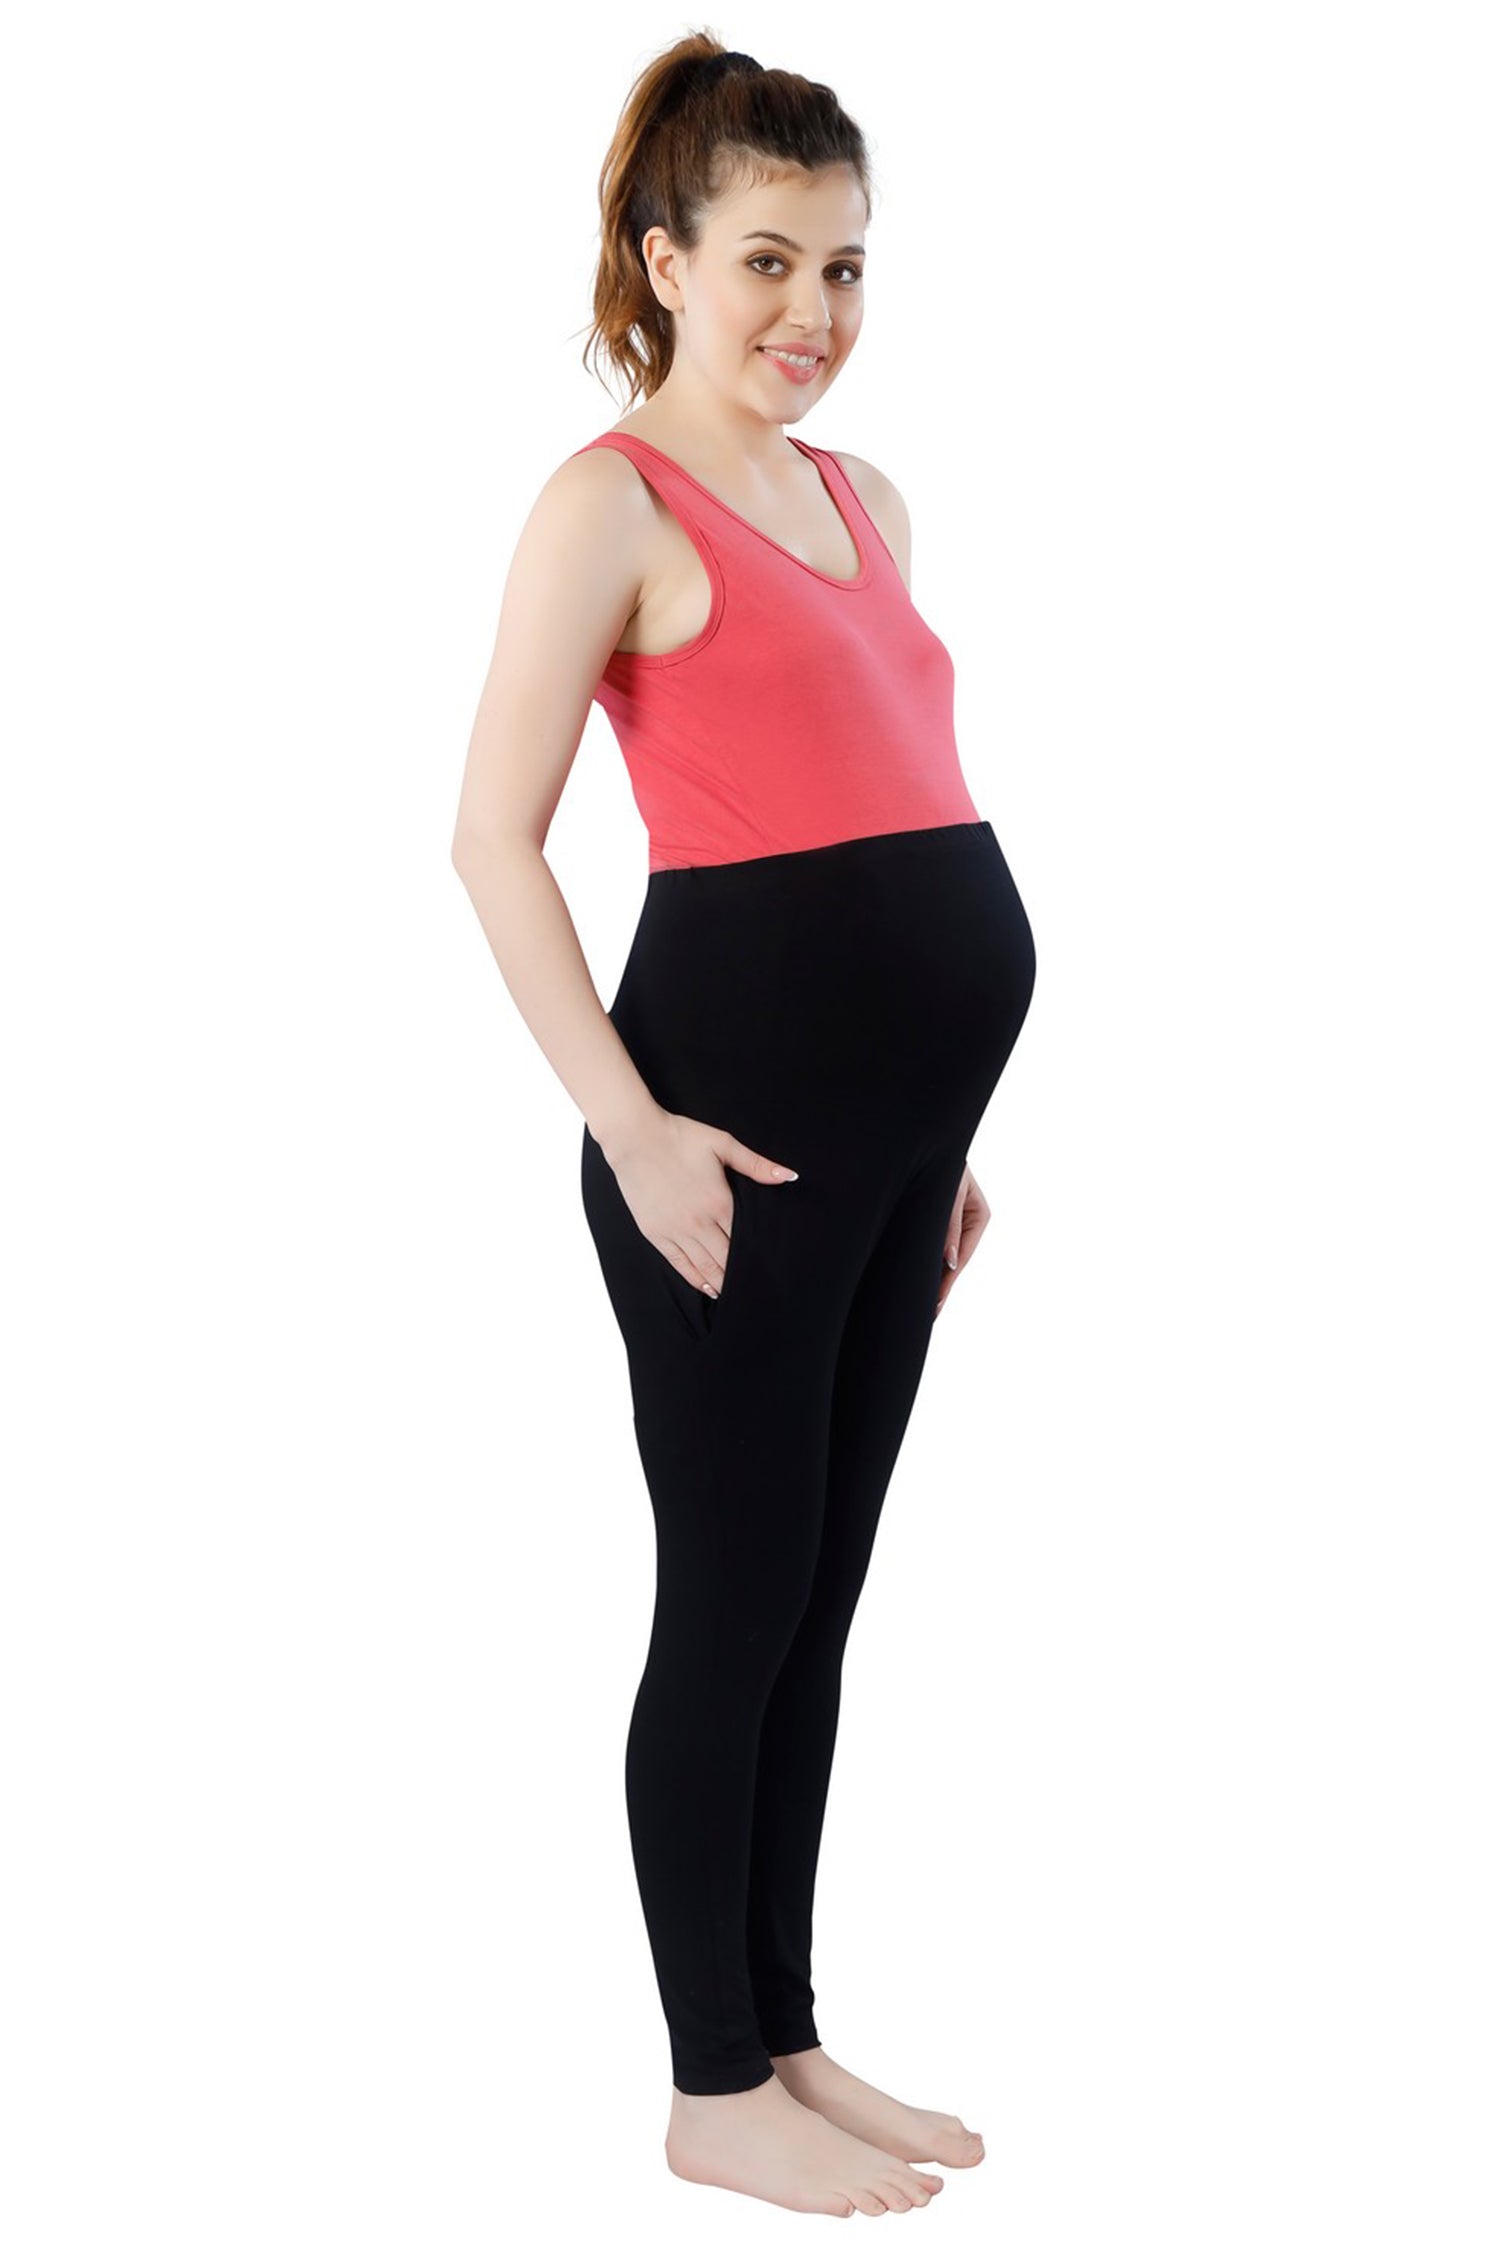 TRASA Women's Maternity Cotton Leggings Pregnancy Yoga Pants with Pockets -  Royal Blue